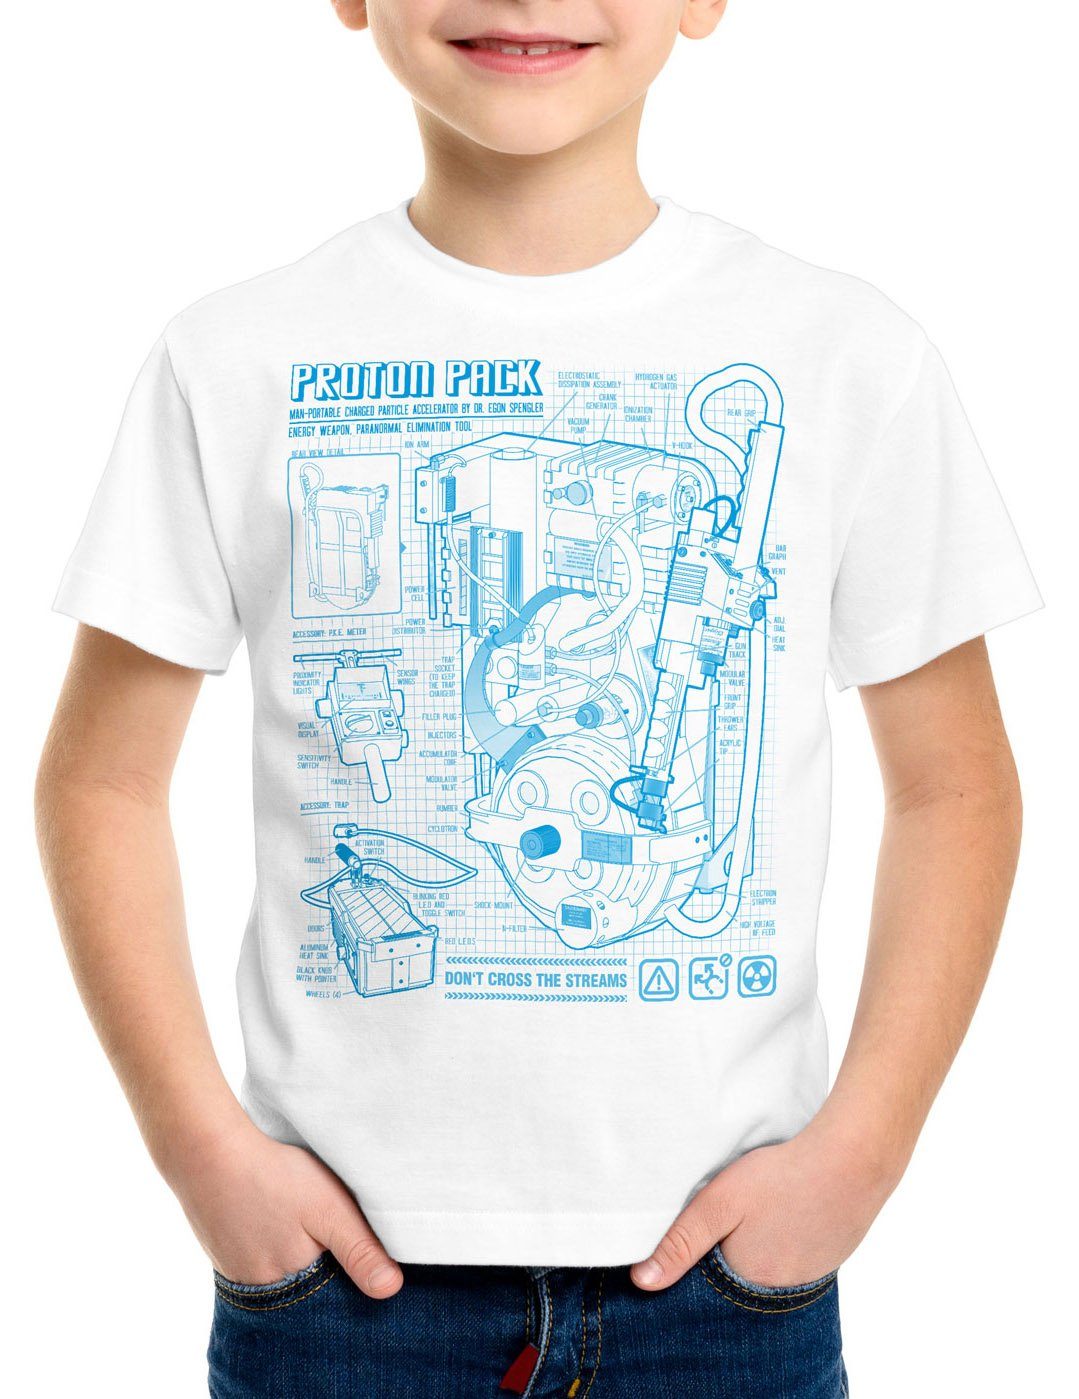 style3 Print-Shirt Kinder T-Shirt Geisterjäger weiß Protonenstrahler pack Blaupause proton